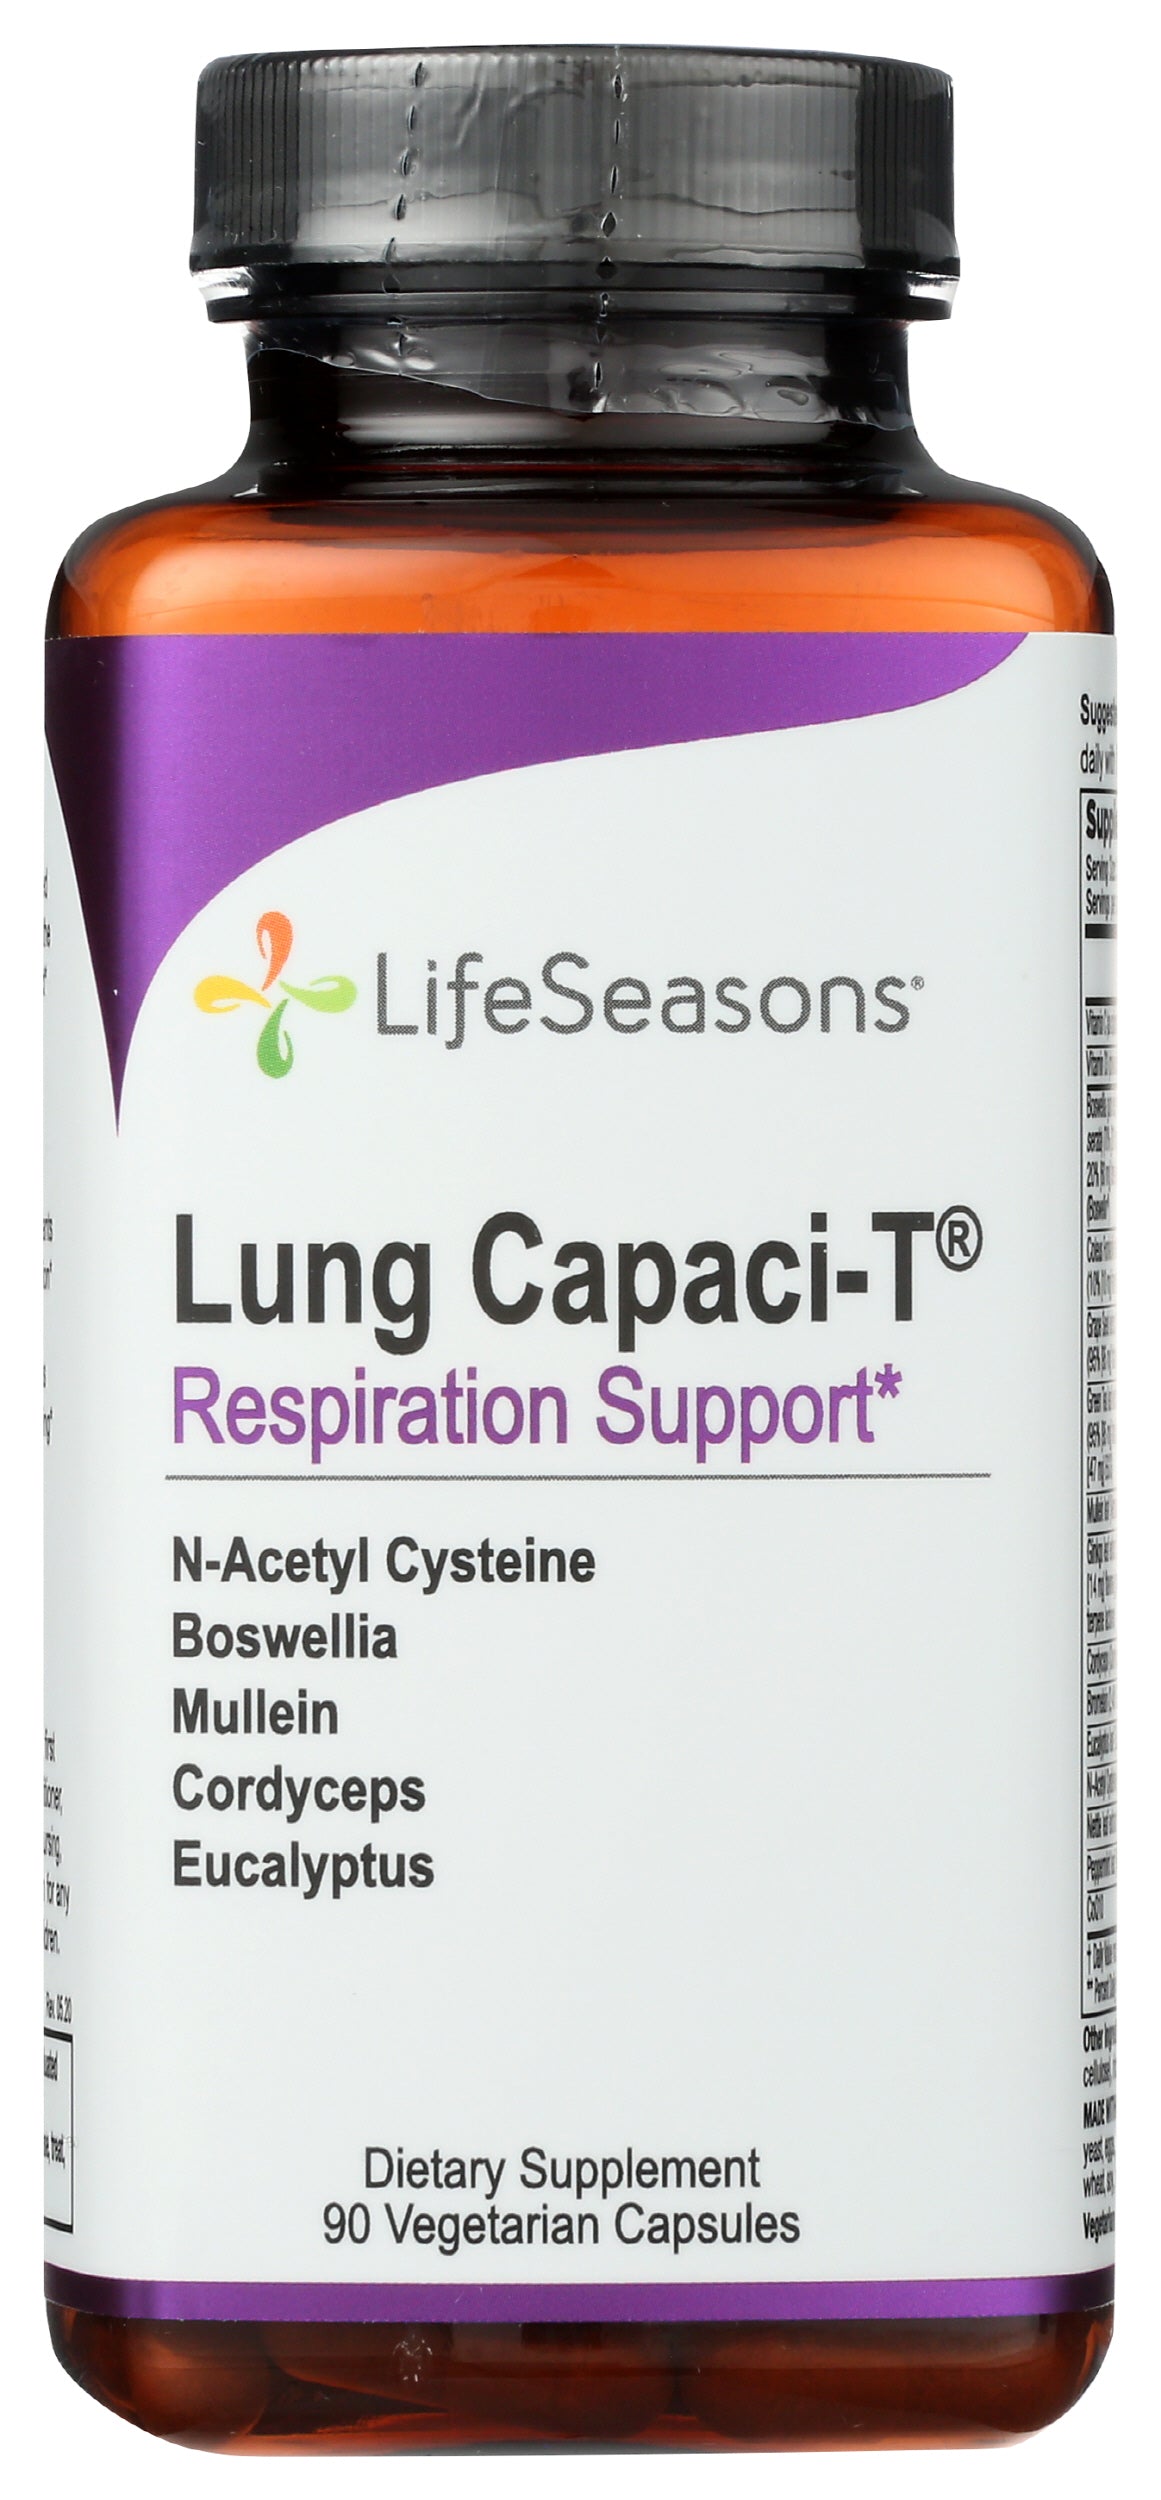 LifeSeasons Lung Capaci-T 90 Veg Capsules Front of Bottle